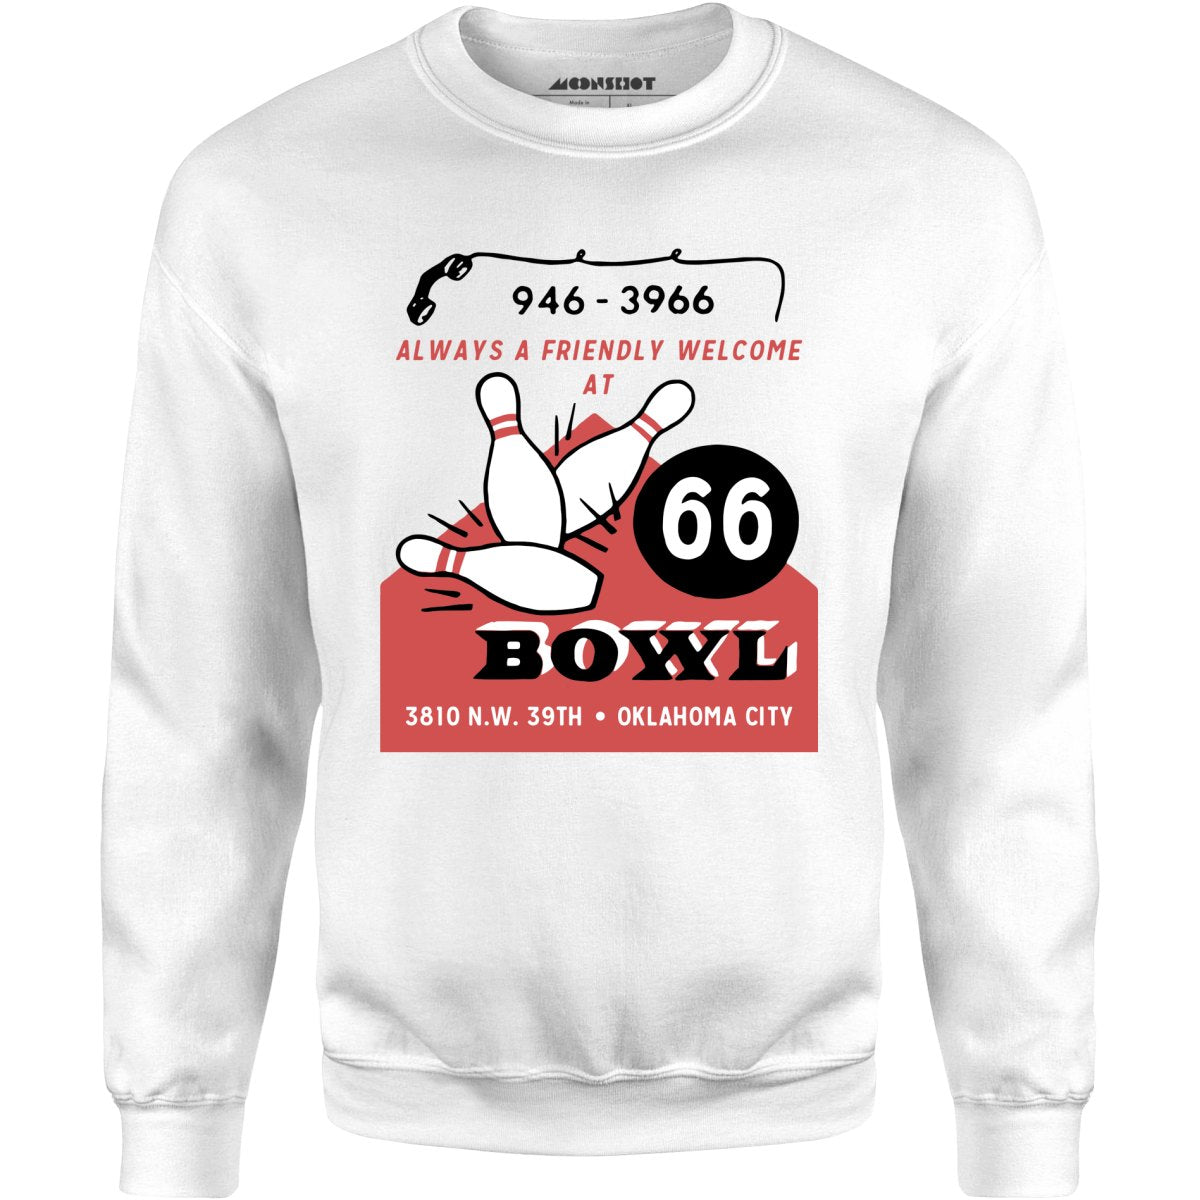 66 Bowl - Oklahoma City, OK - Vintage Bowling Alley - Unisex Sweatshirt